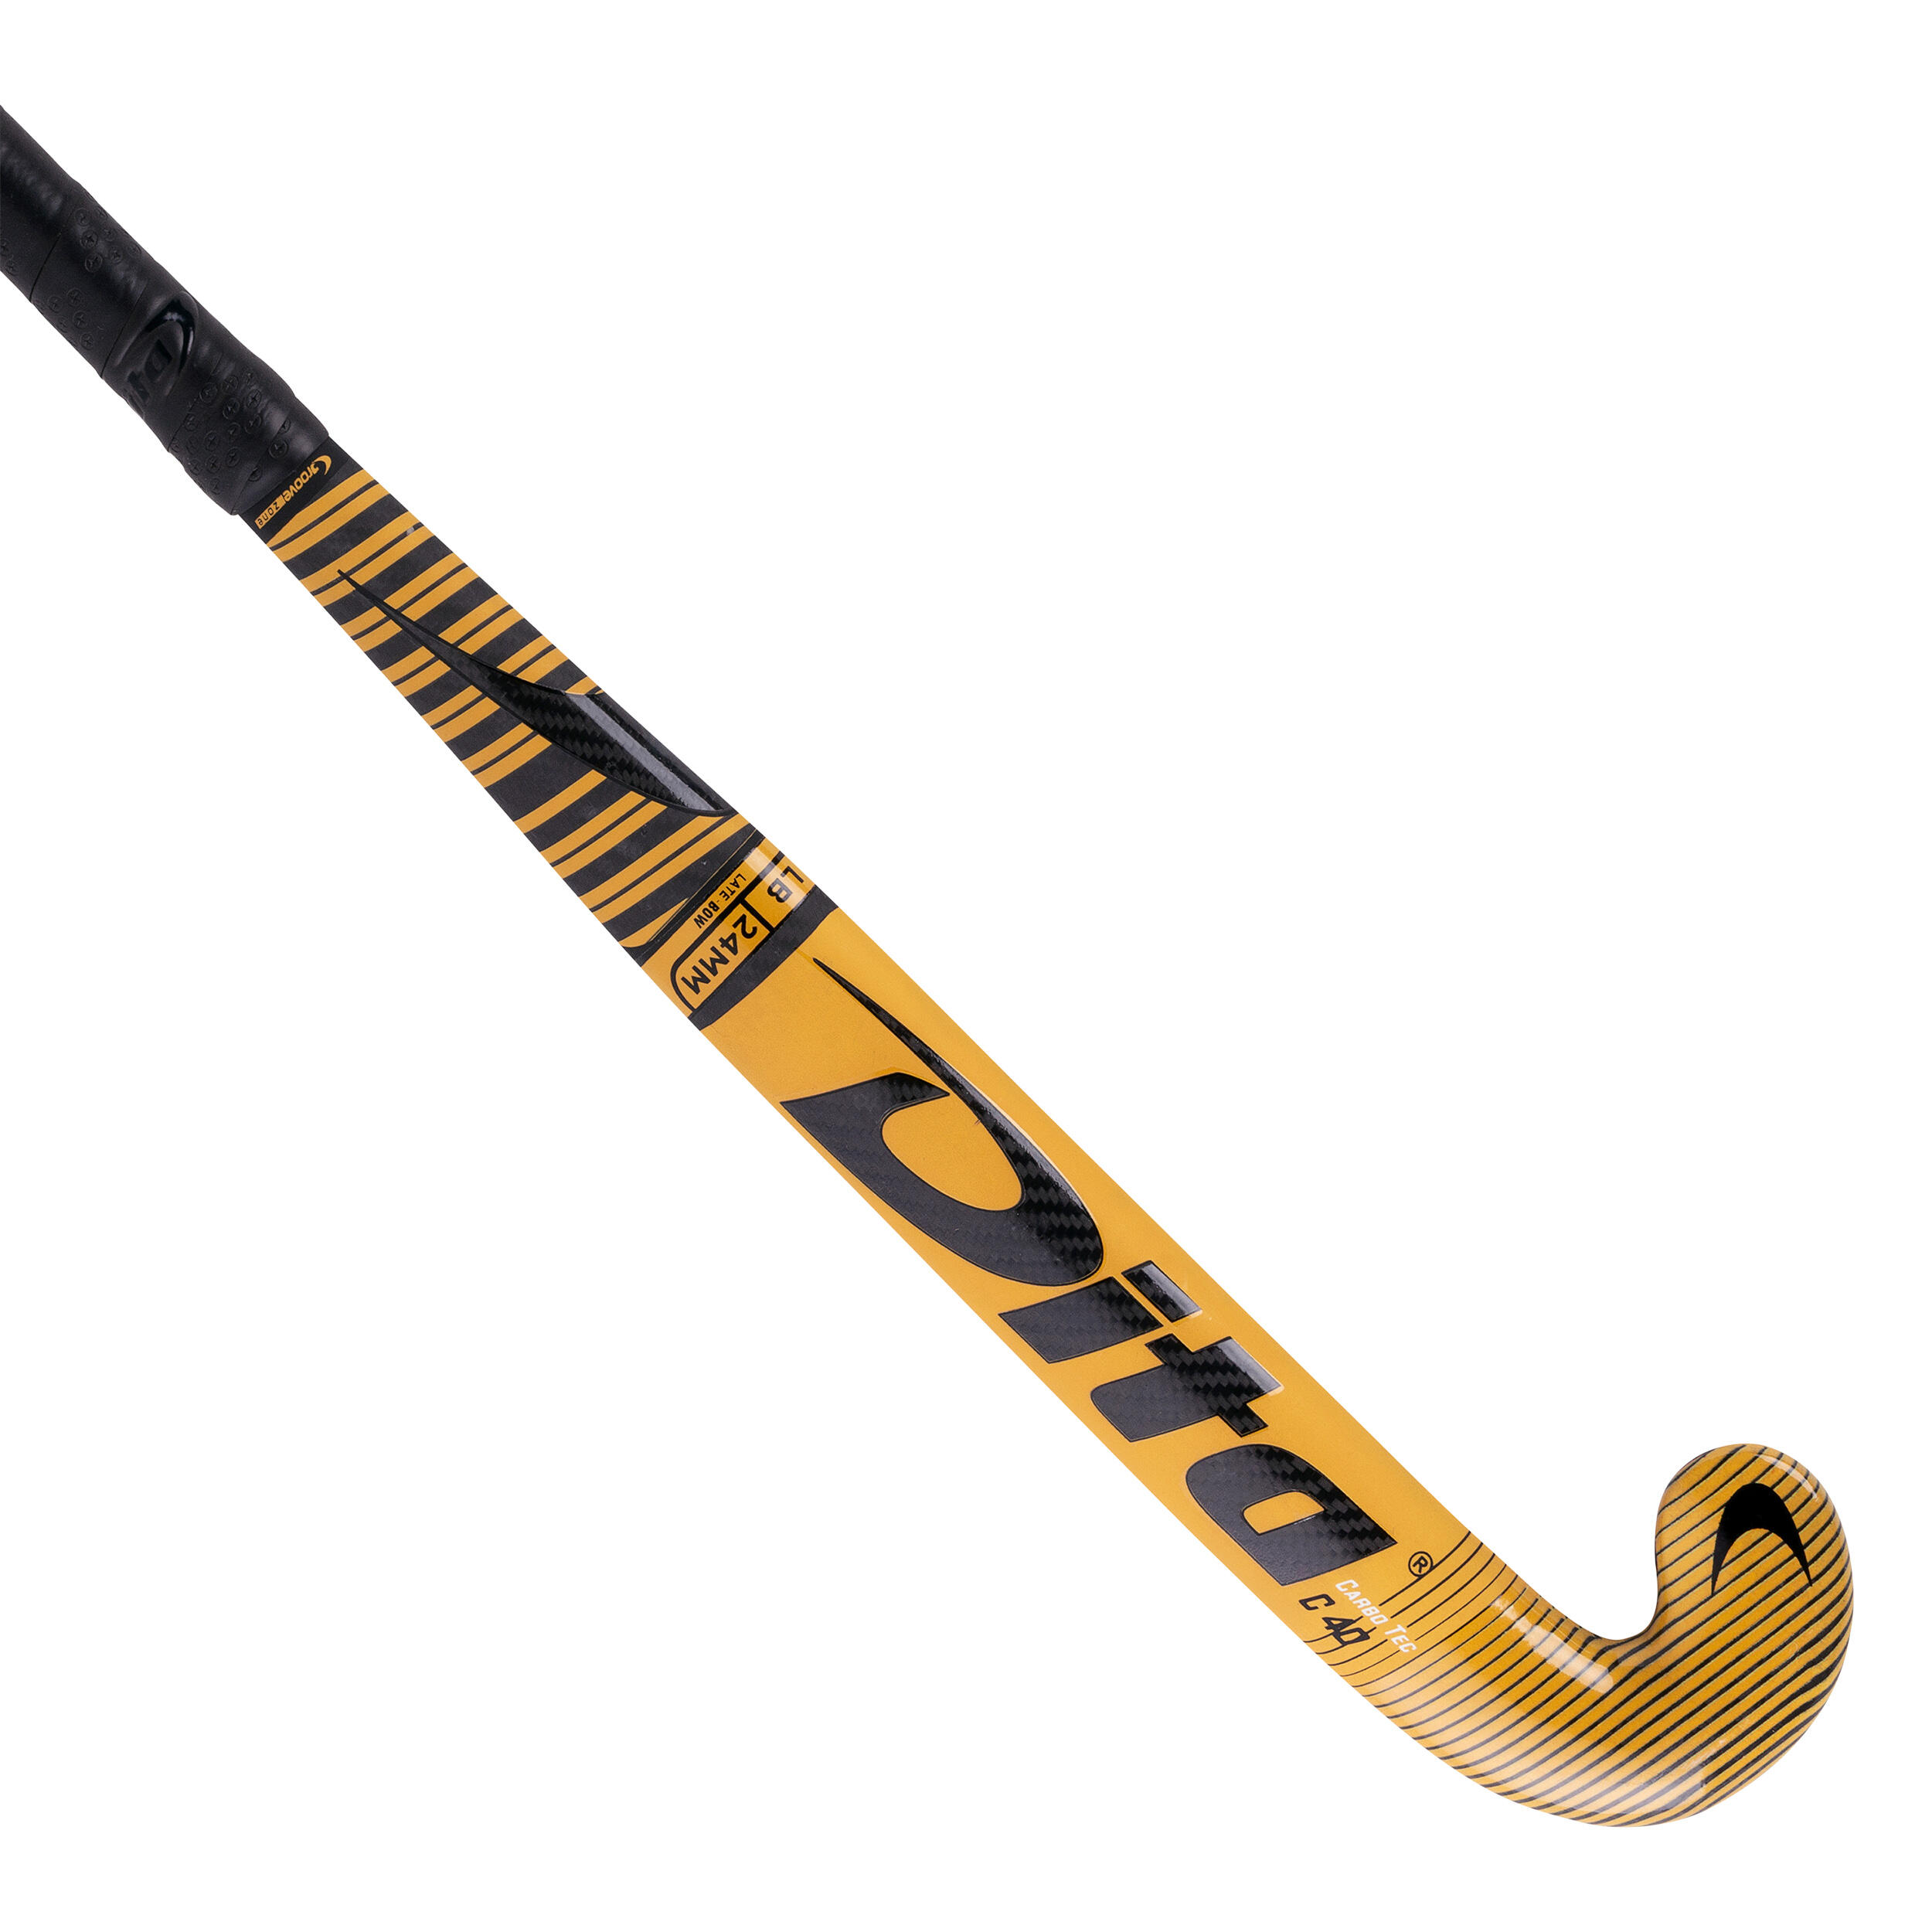 DITA Kids' Advanced 40% Carbon Low Bow Field Hockey Stick Carbotec C40 - Golden Black